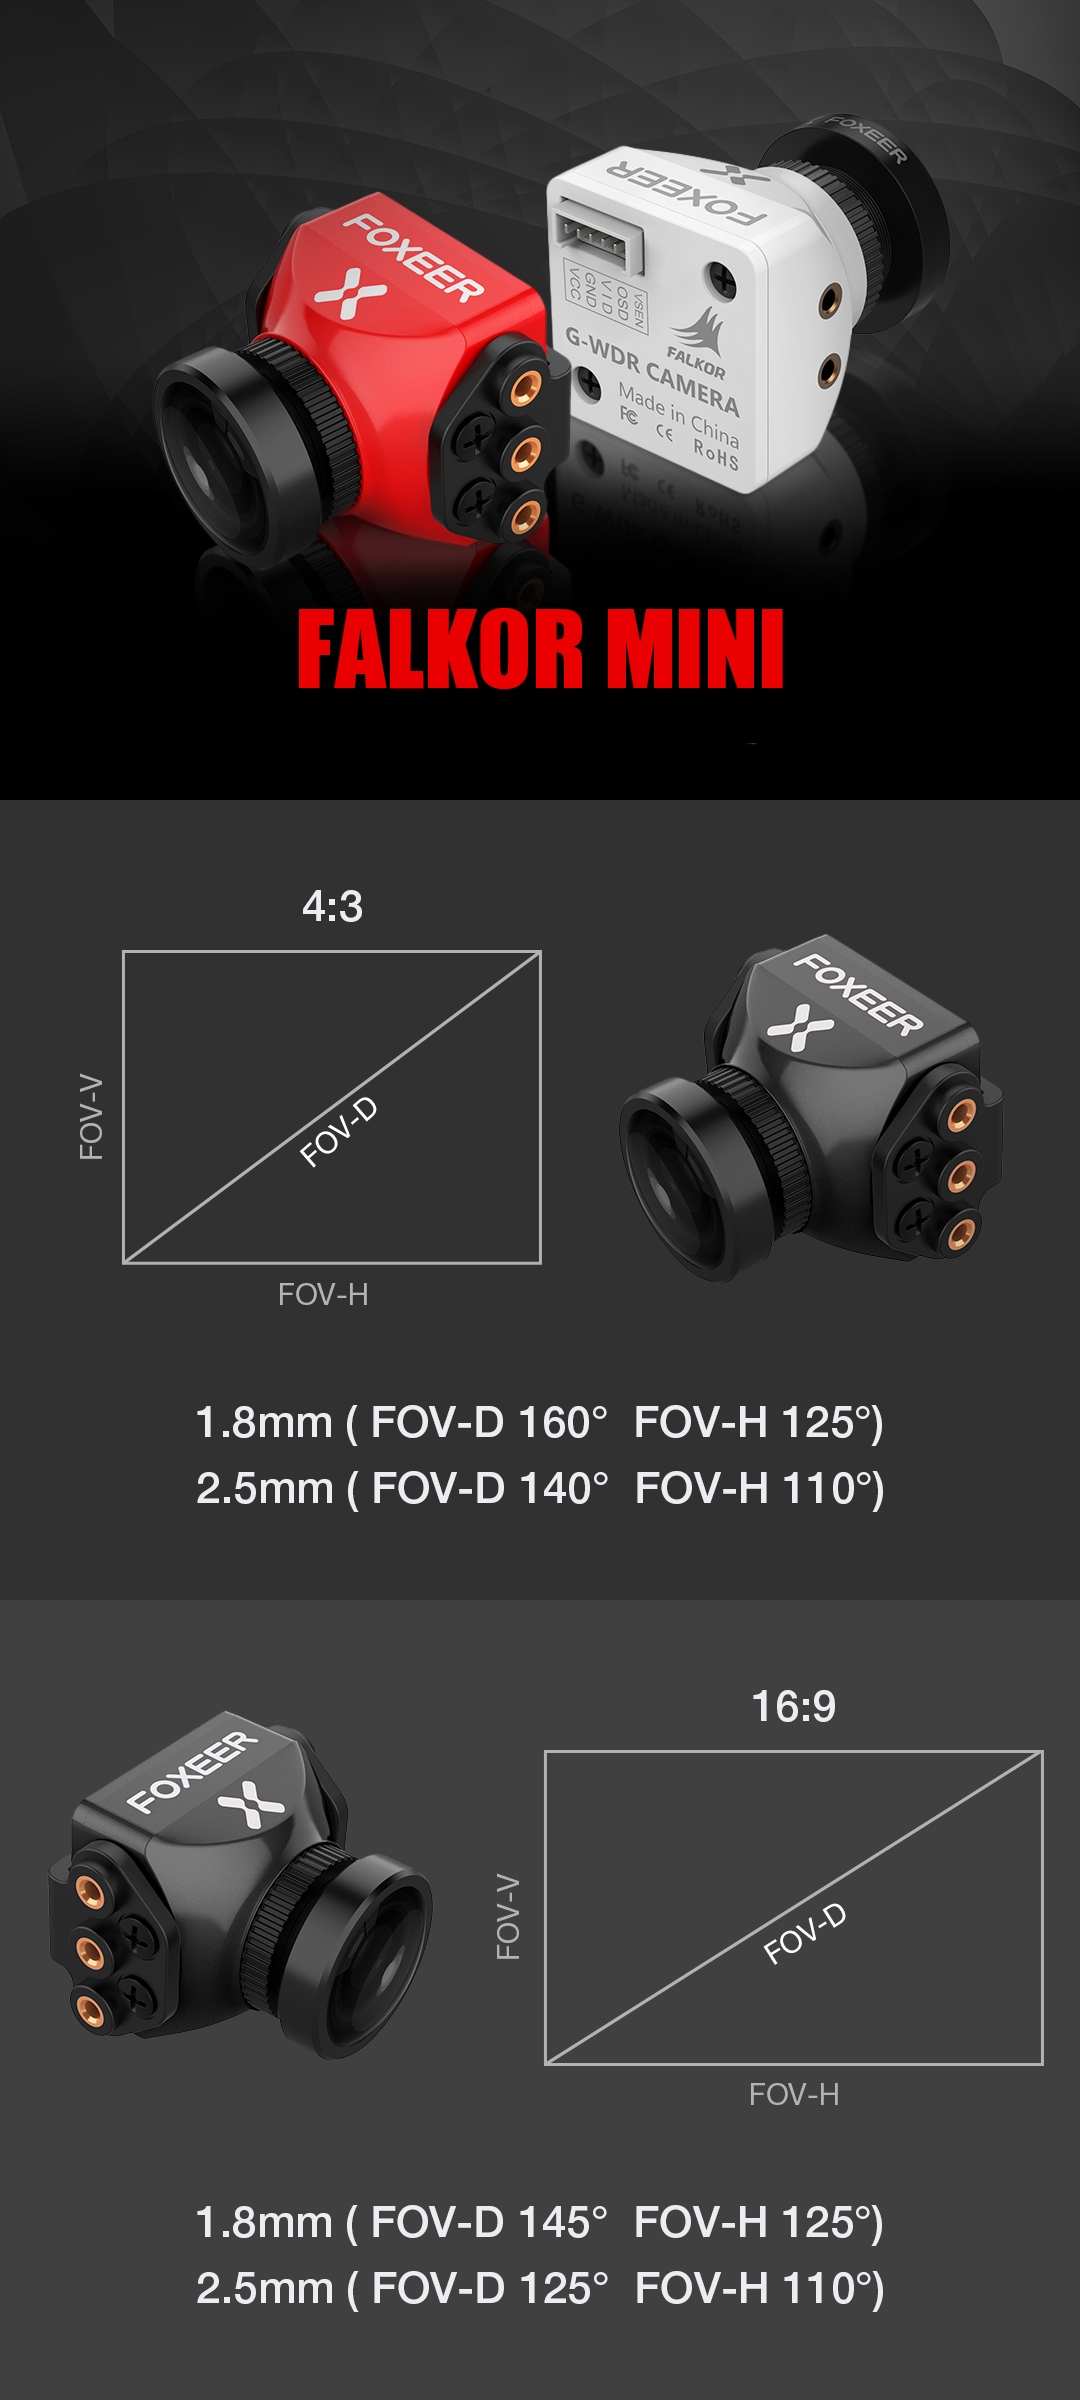 Upgraded Foxeer Falkor 1200TVL 1/3 CMOS Mini/Full Size FPV Camera 16:9/4:3 PAL/NTSC Switchable GWDR